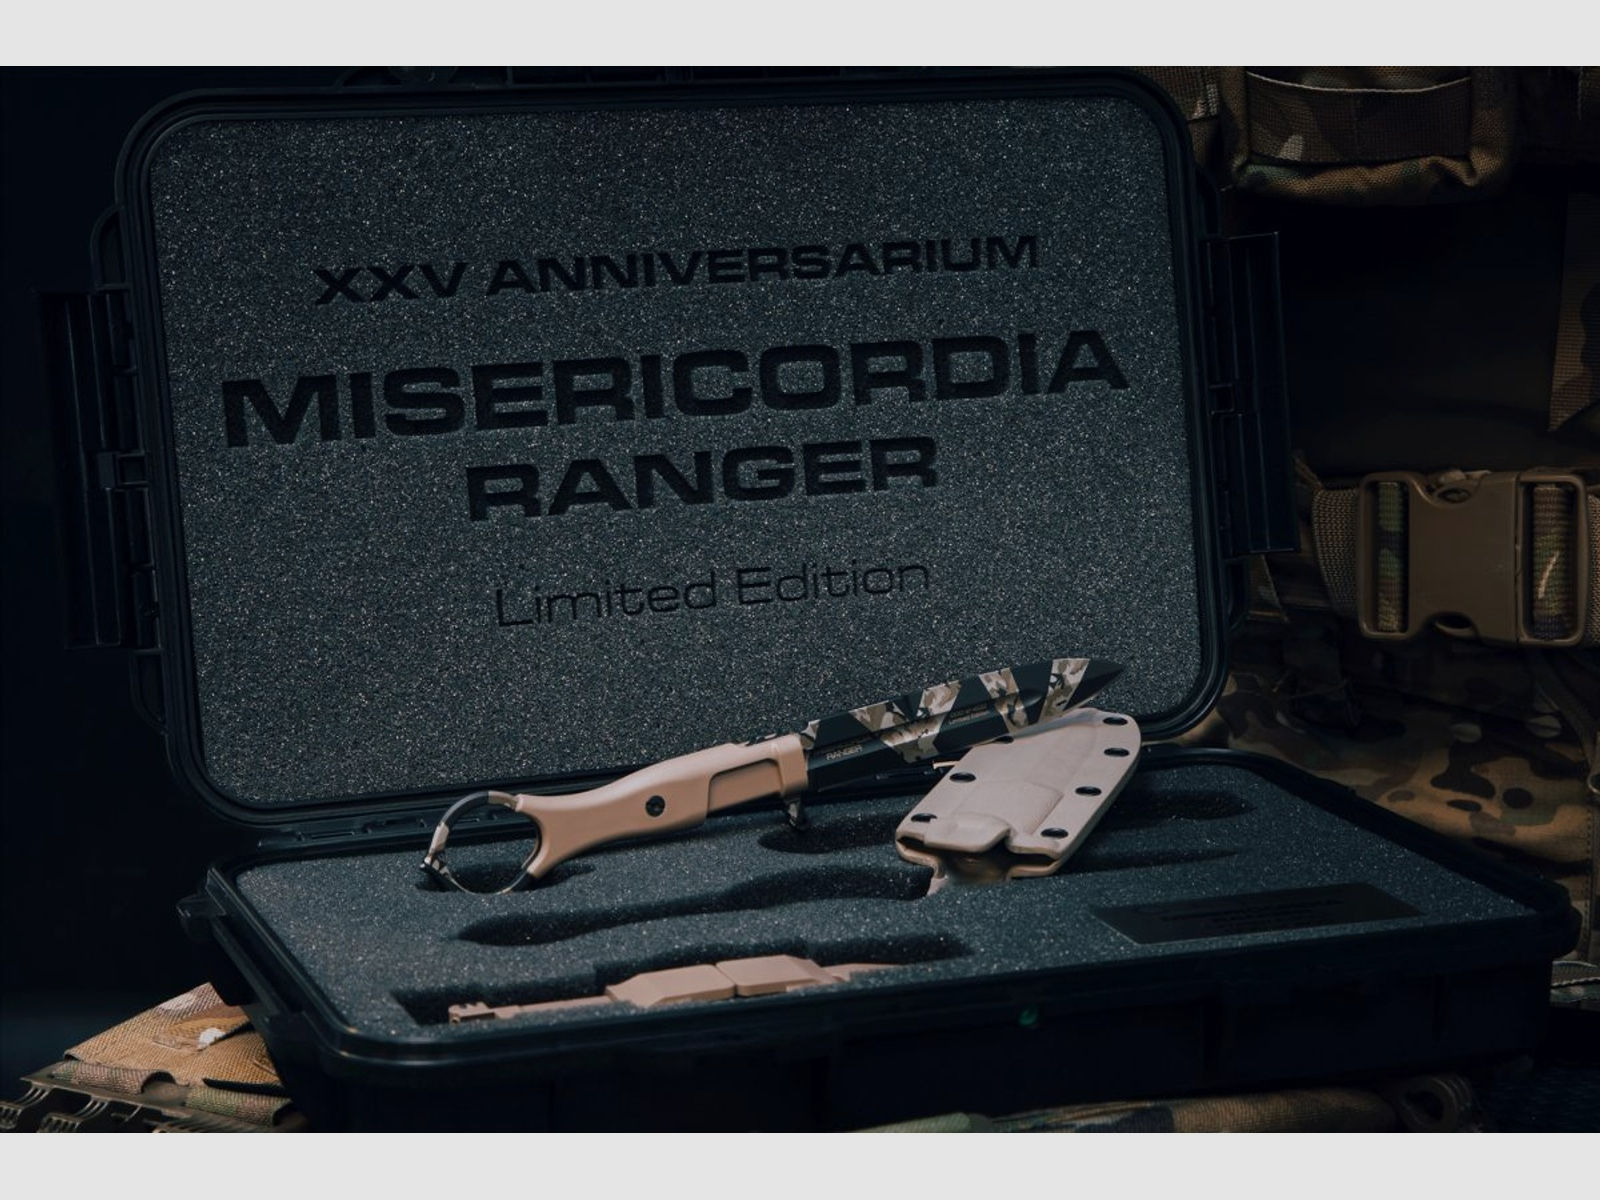 Misericordia Ranger XXV Anniversarium - Limited Edition | 96504